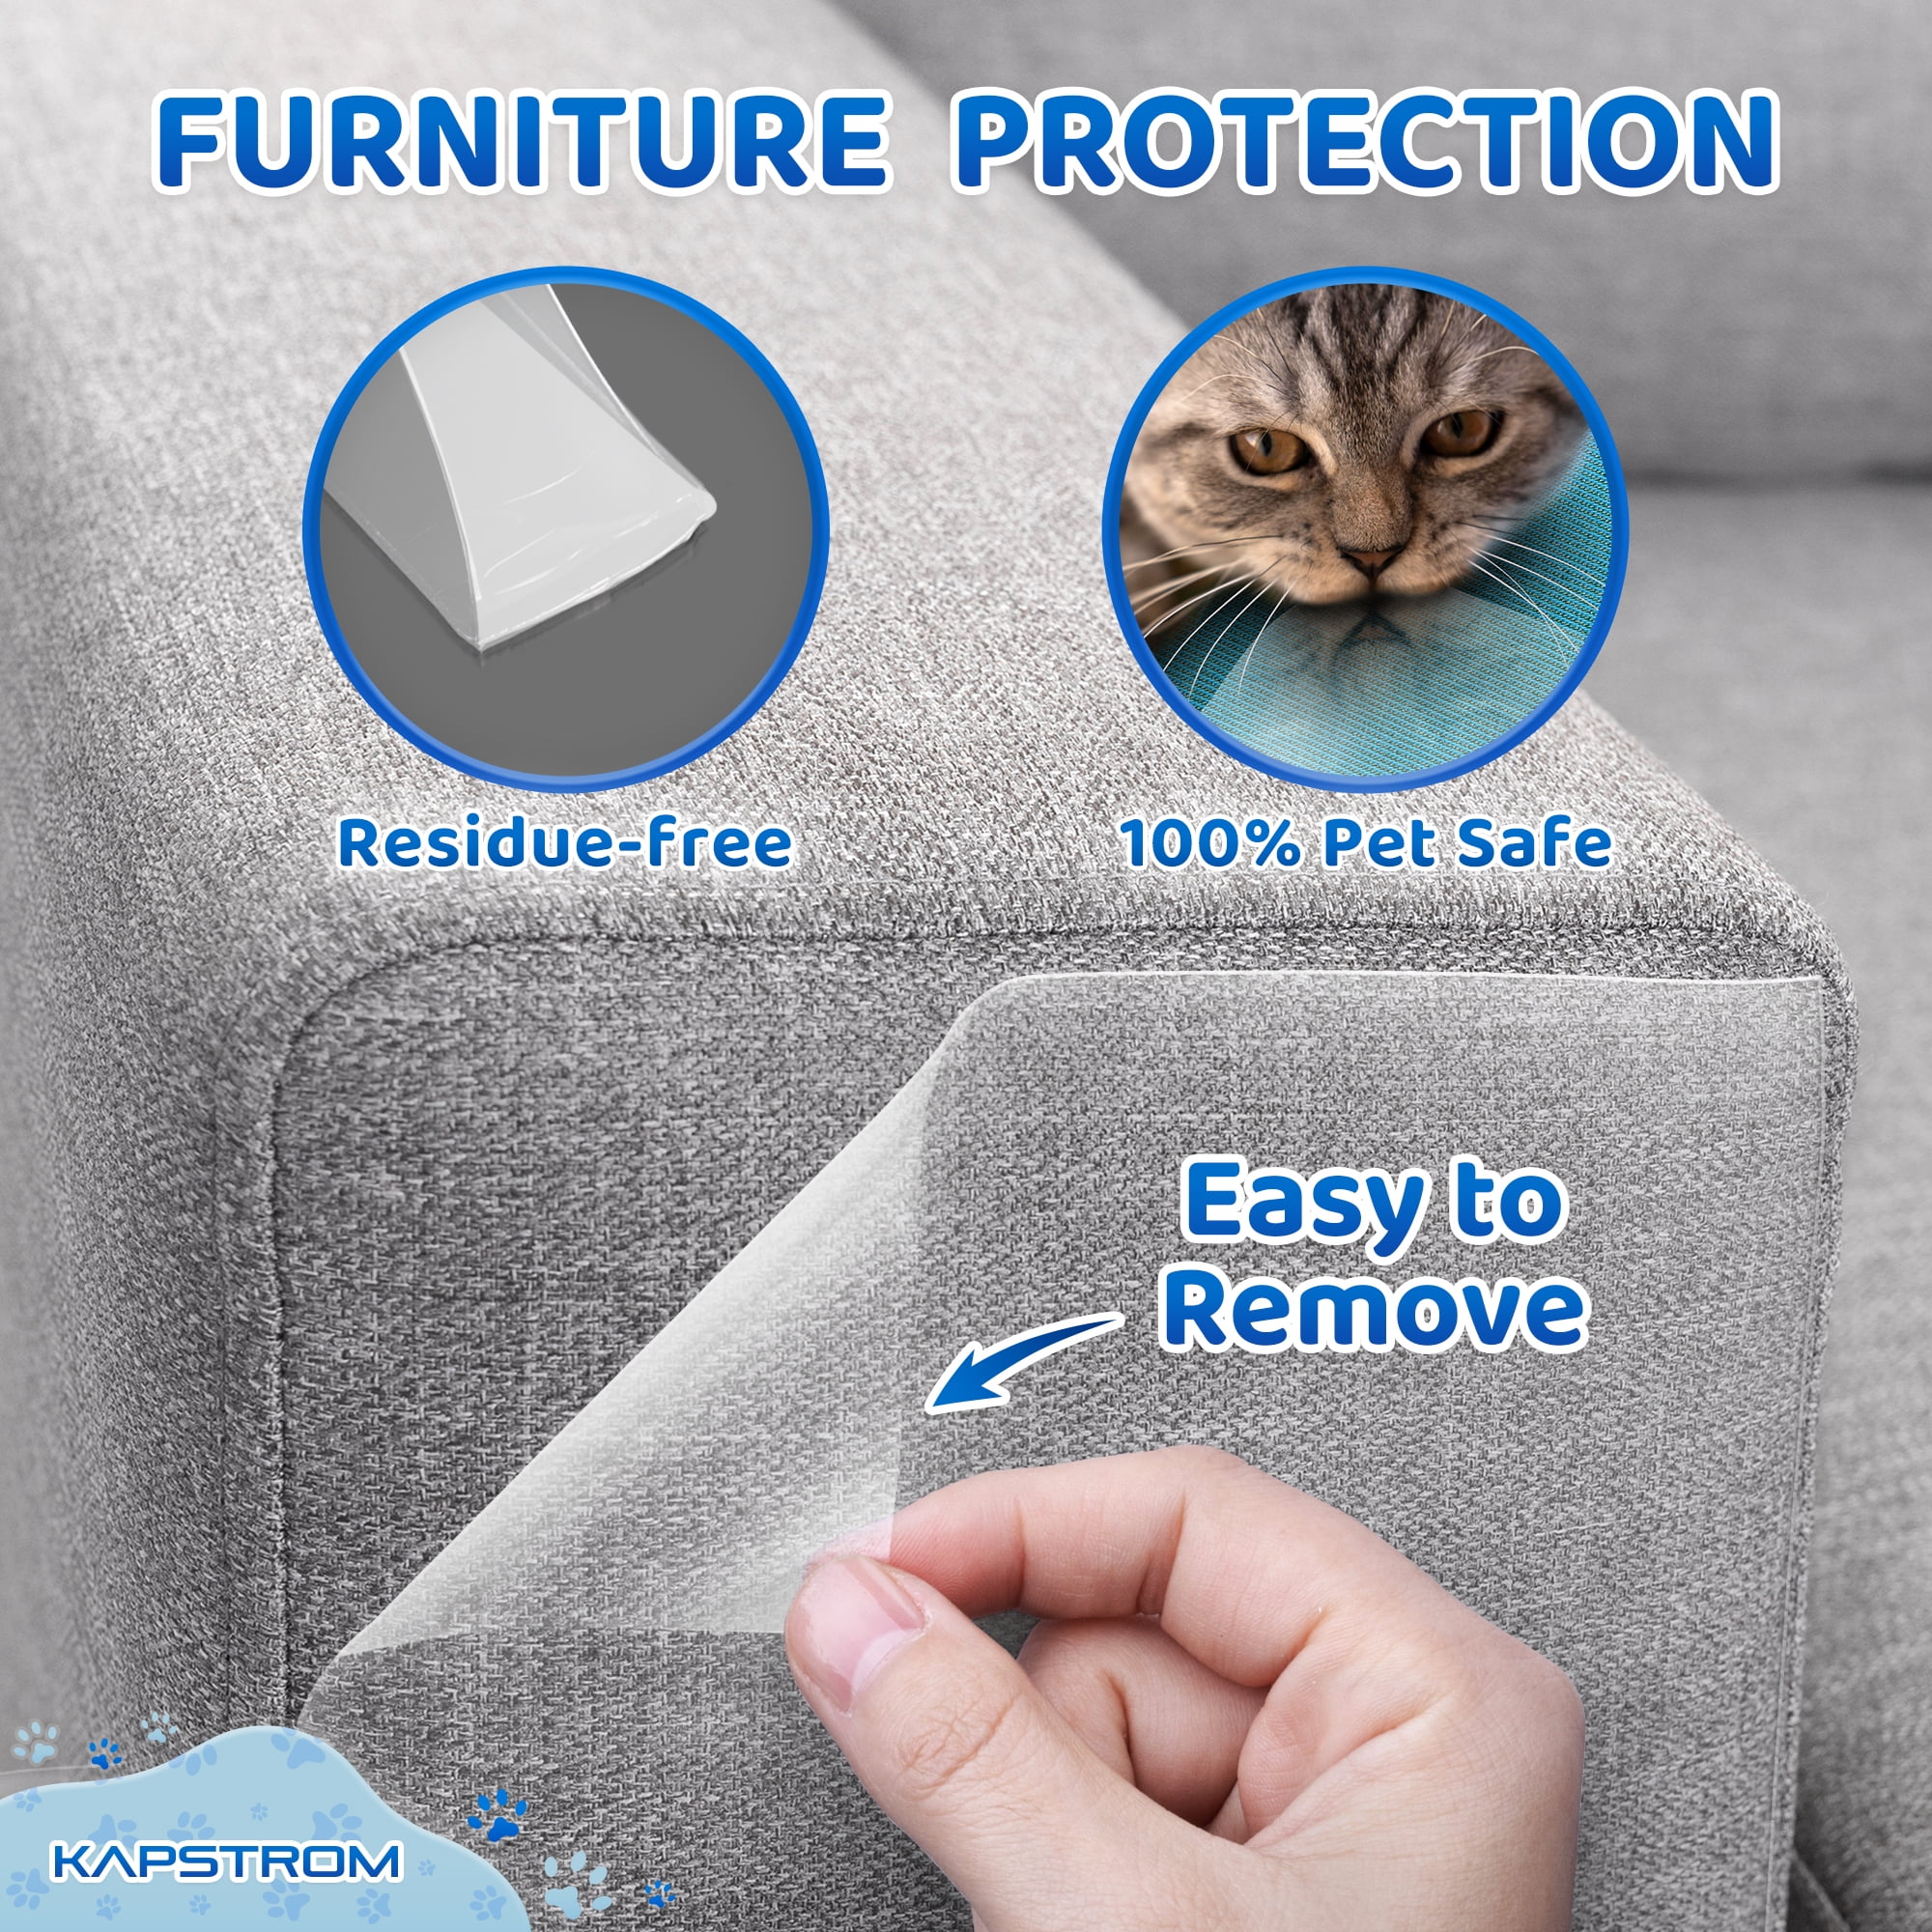 Greyparrot Cat Scratch Deterrent Furniture Protector Tape for Sofa, Do –  KOL PET